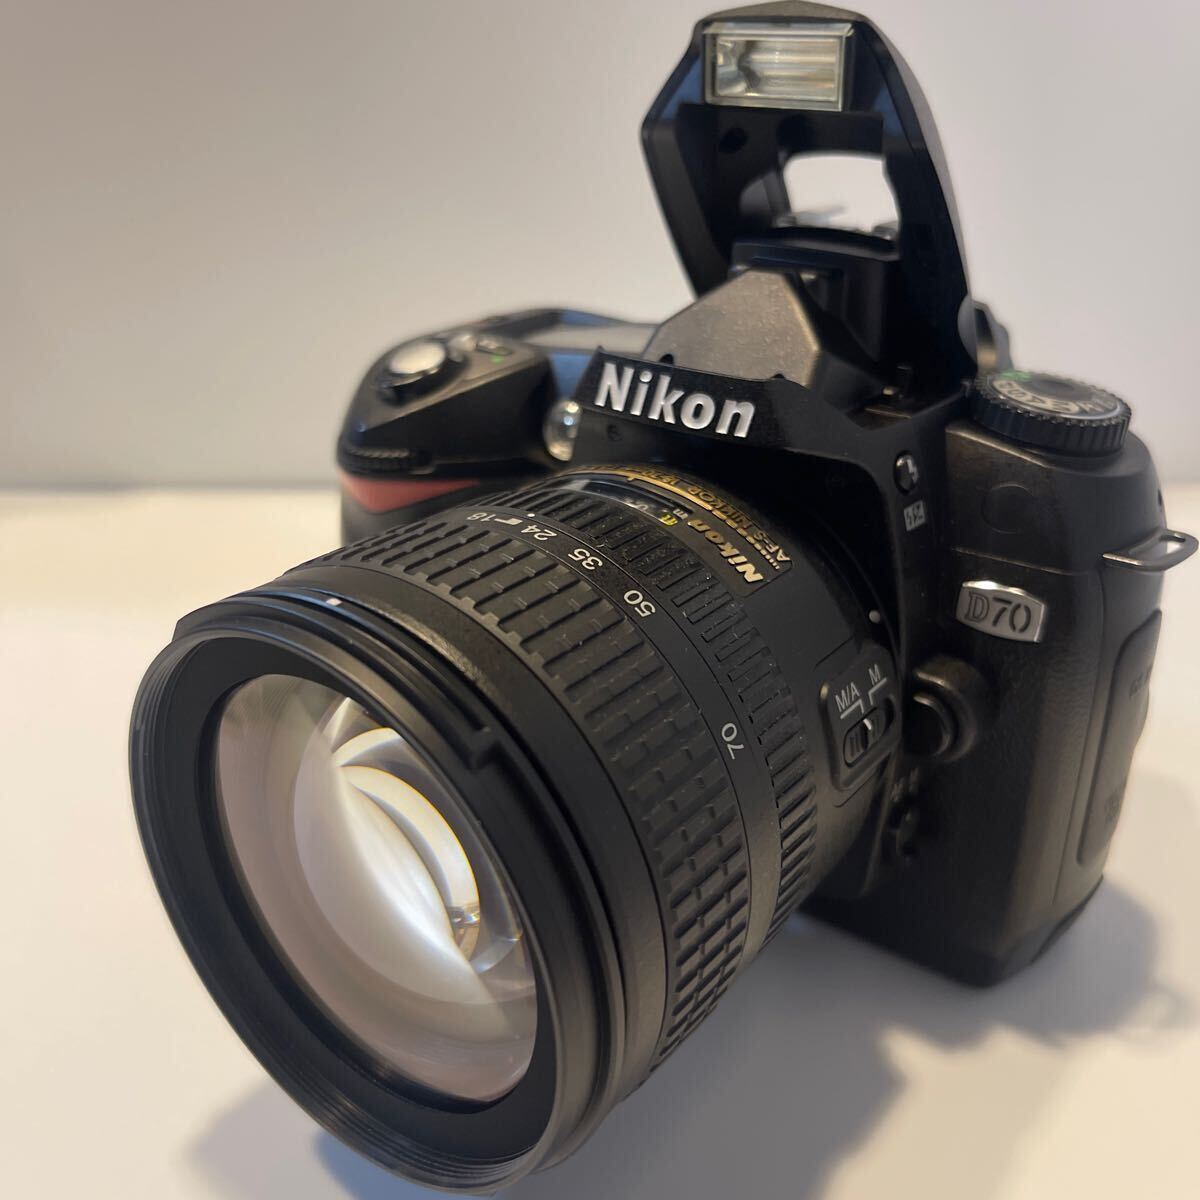 Nikon Nikon D70 18-70mmED G lens kit beautiful goods shutter number 1,457